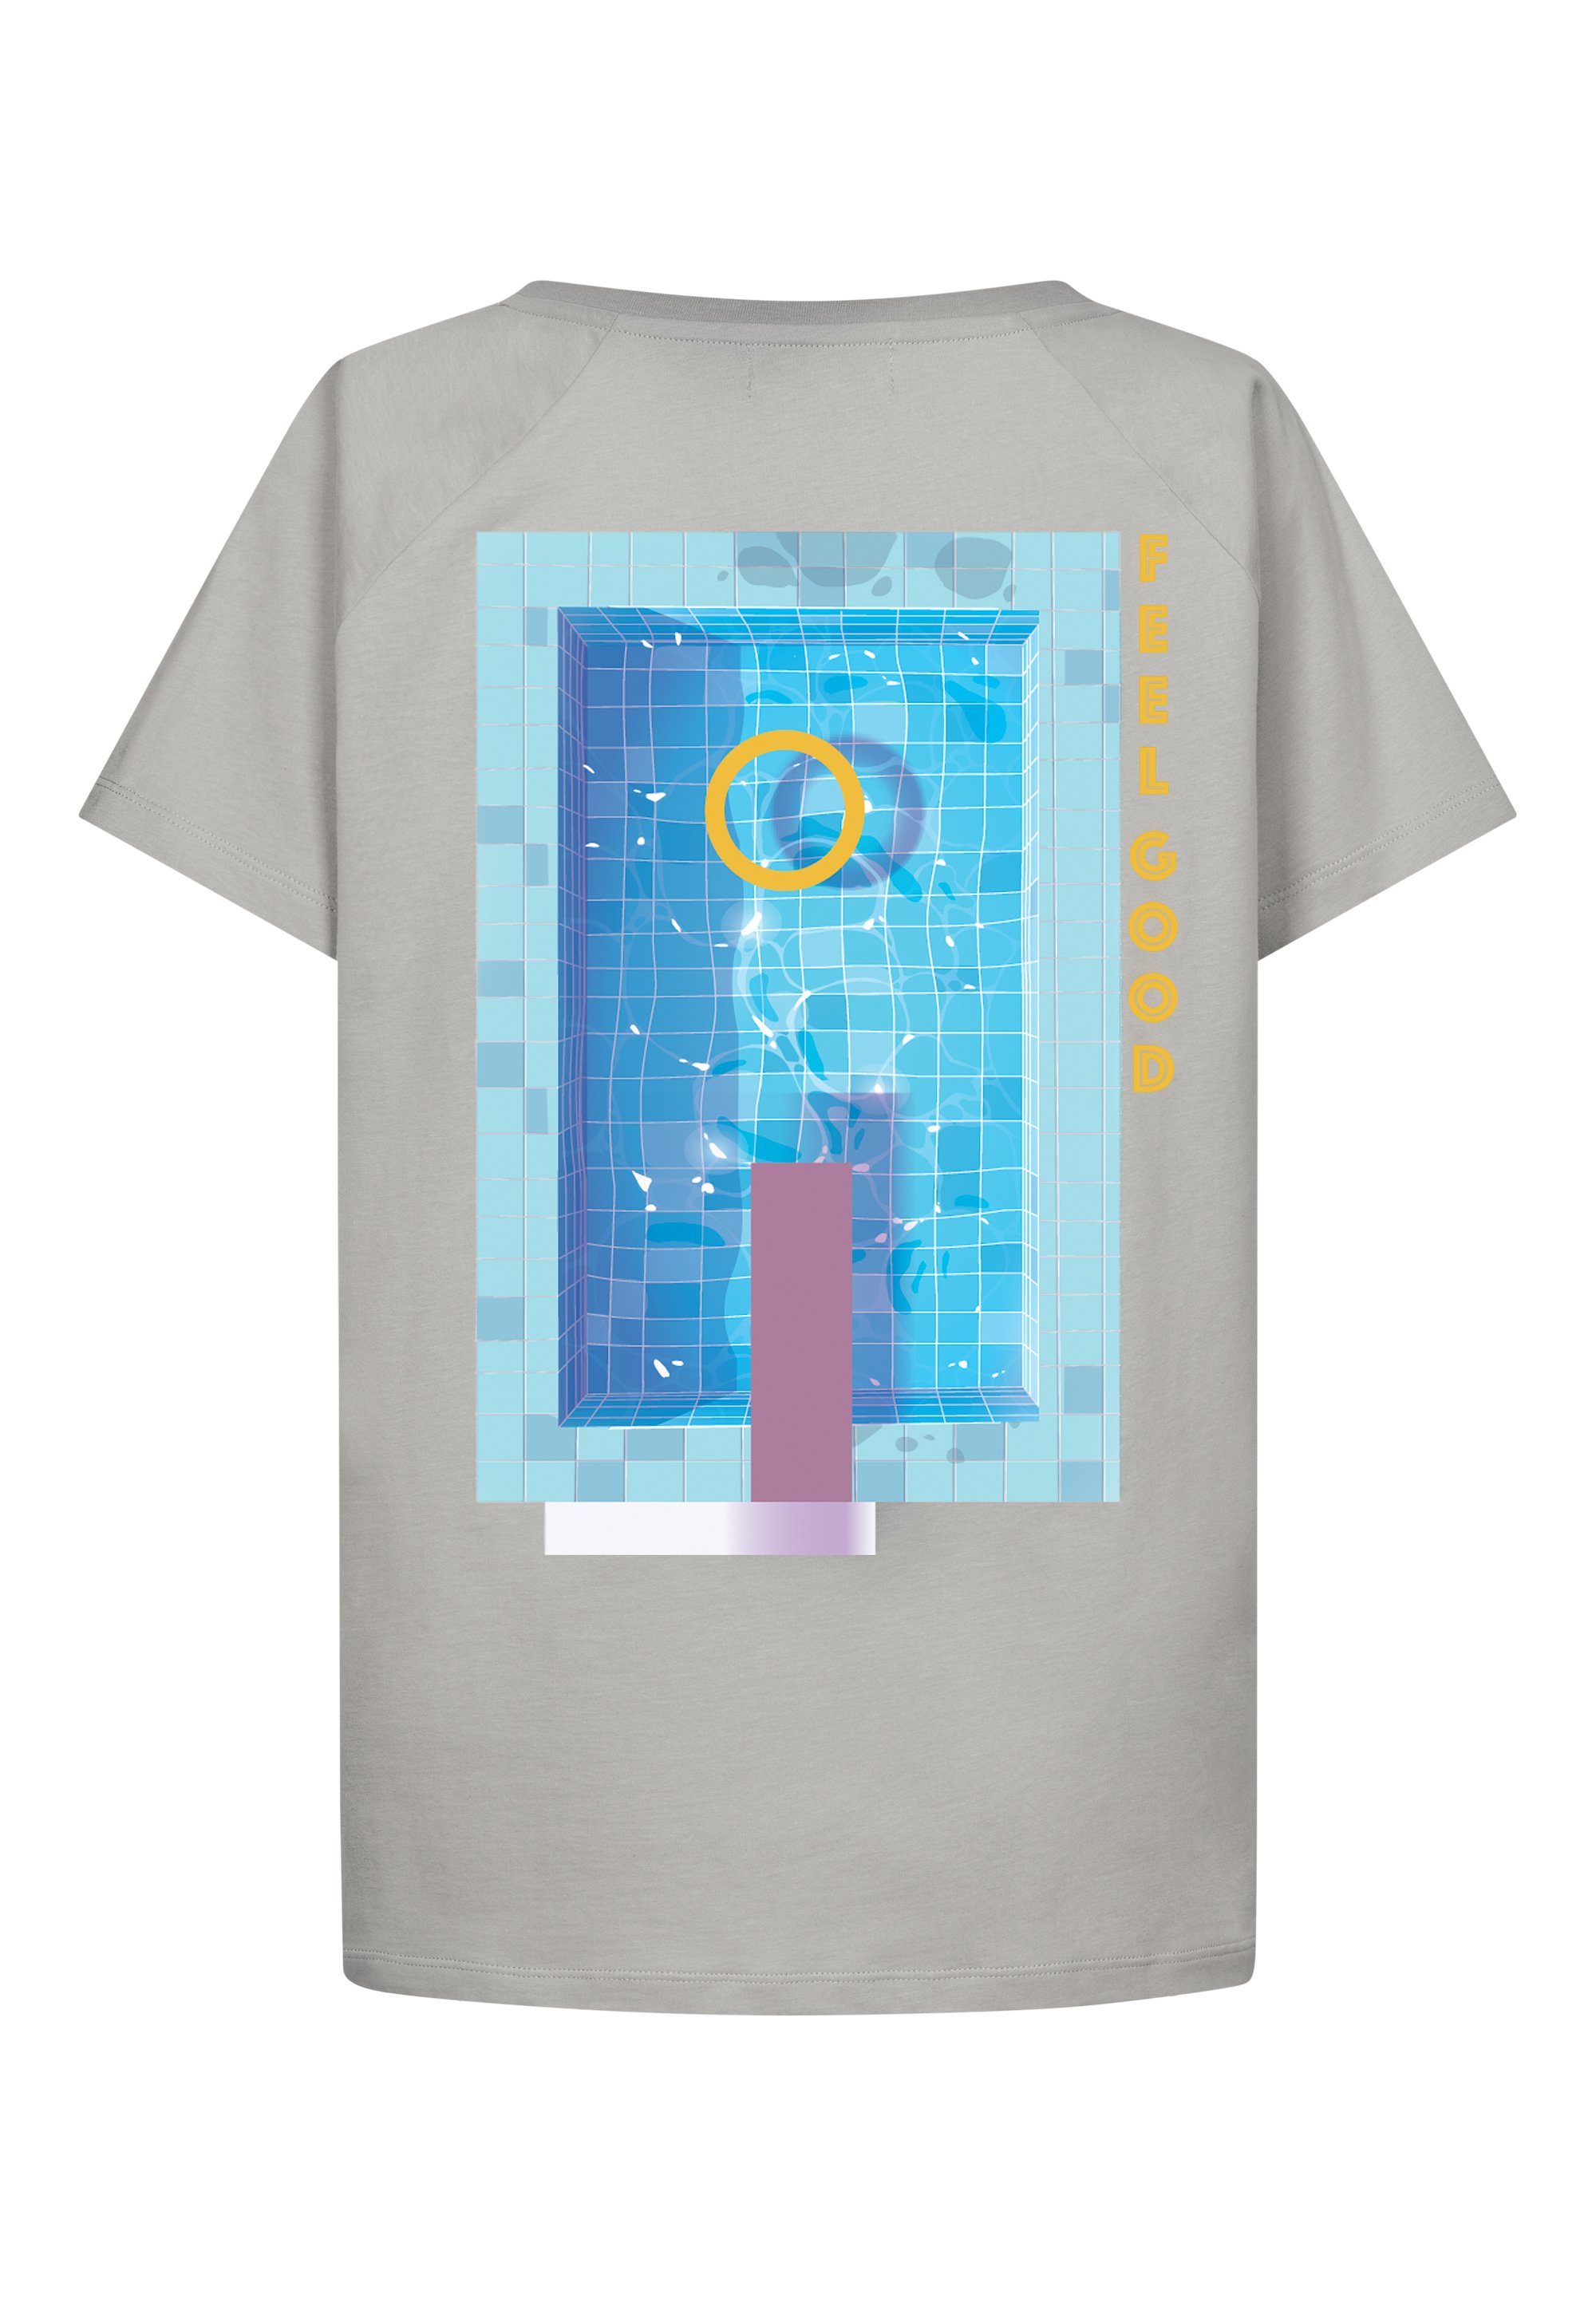 Print-Shirt - FEEL Swimmingpool GOOD Derbe